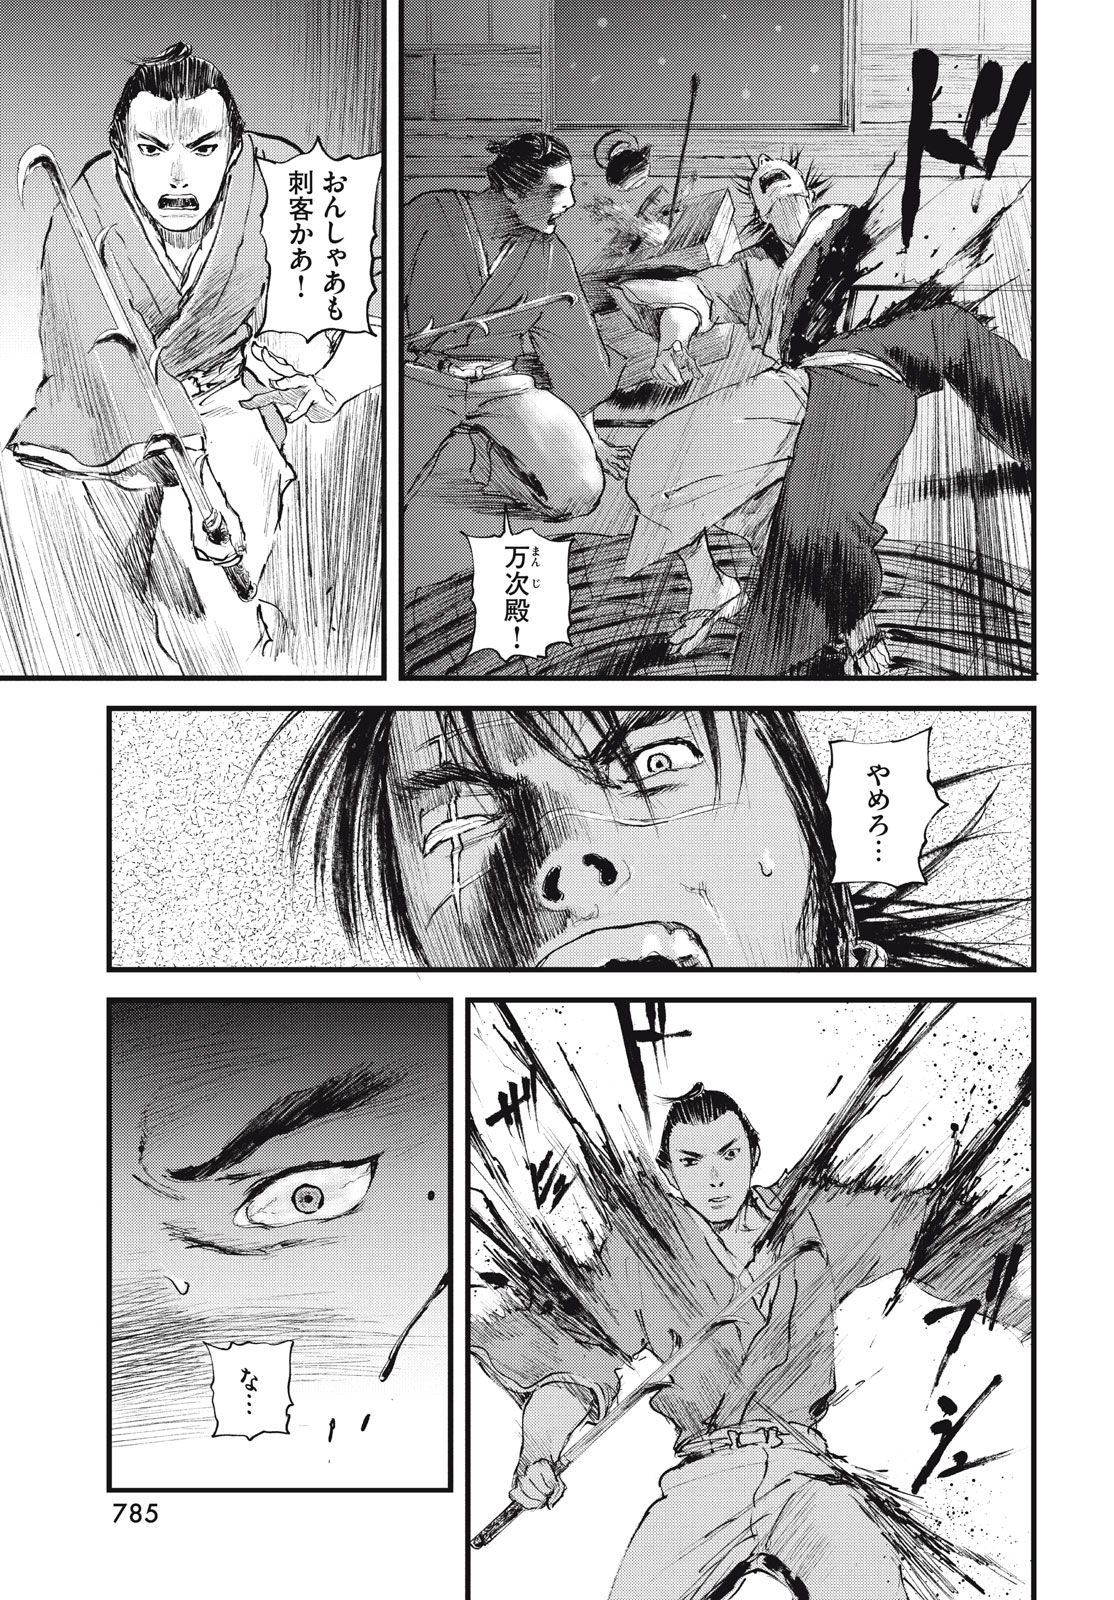 Blade of the Immortal: Bakumatsu Arc - Chapter 55 - Page 3